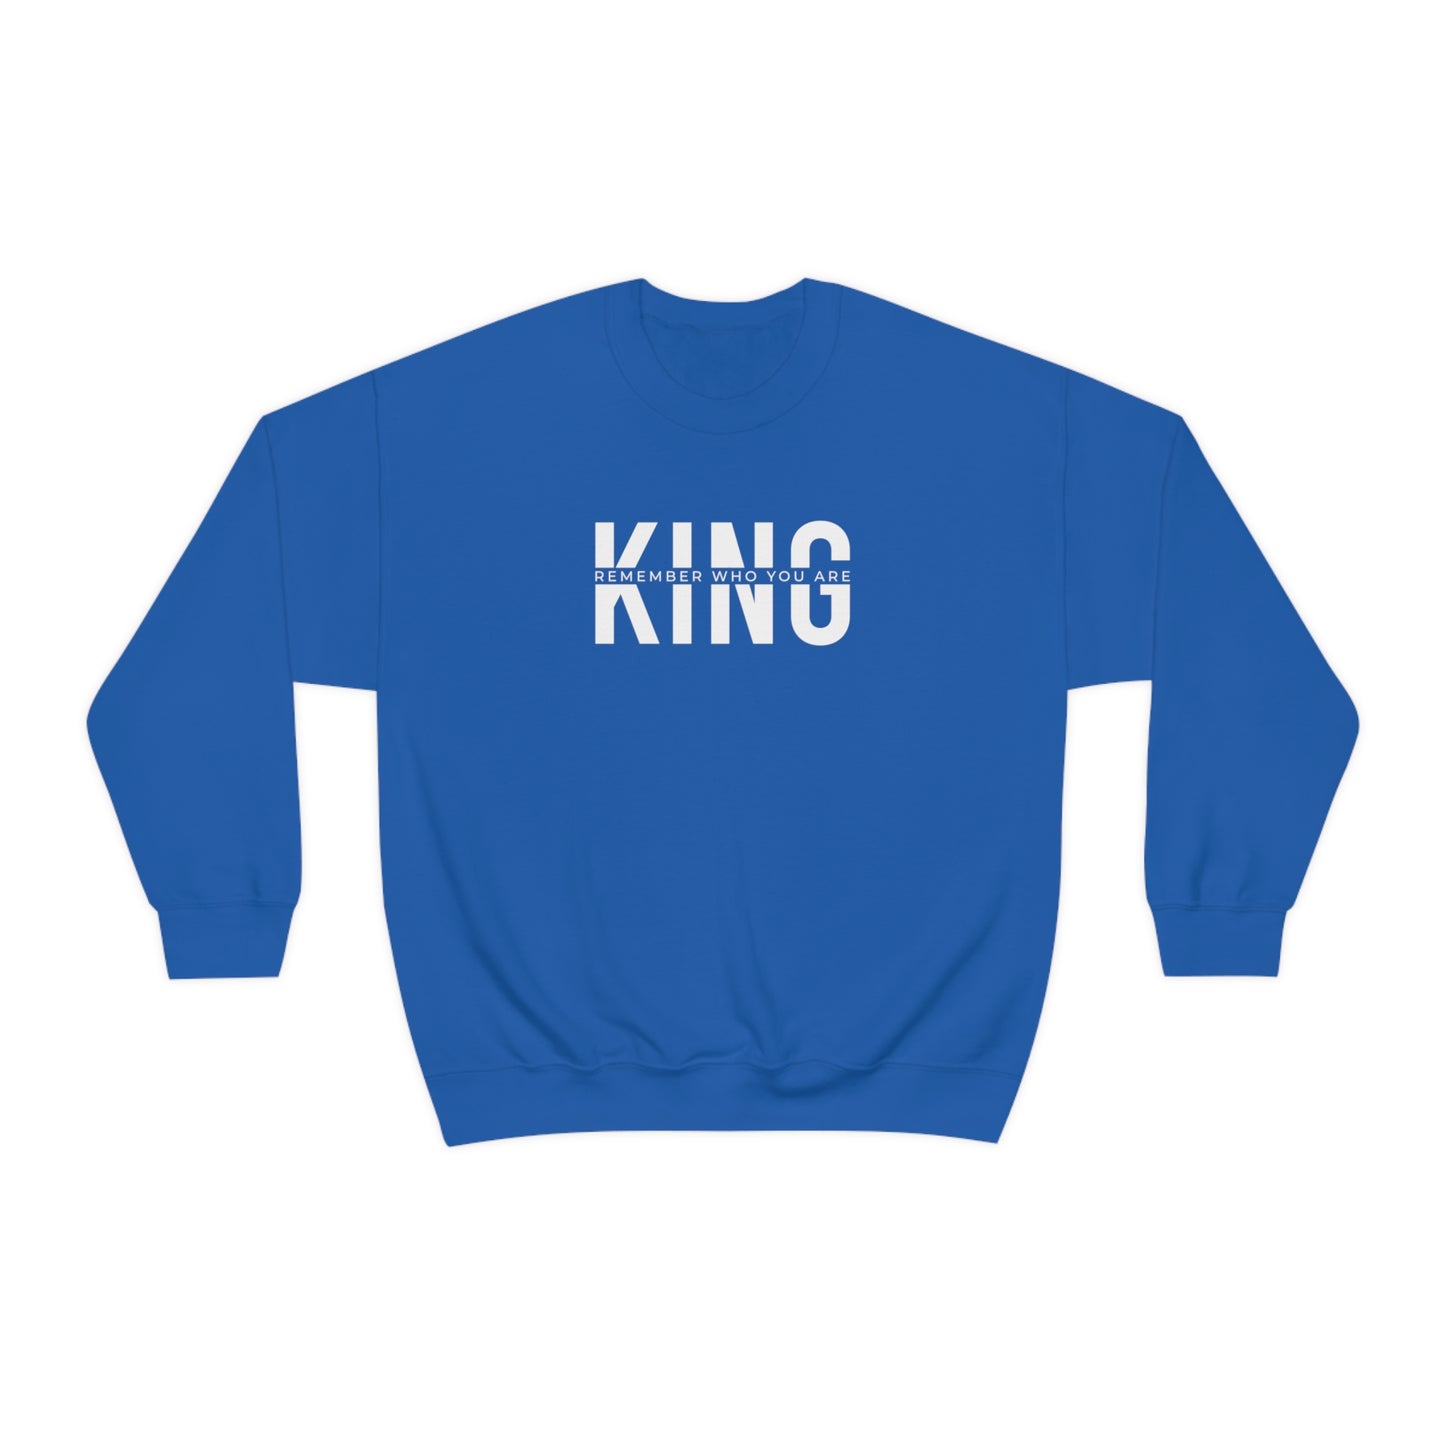 KING: Remember Who You Are (Crewneck Sweatshirt)